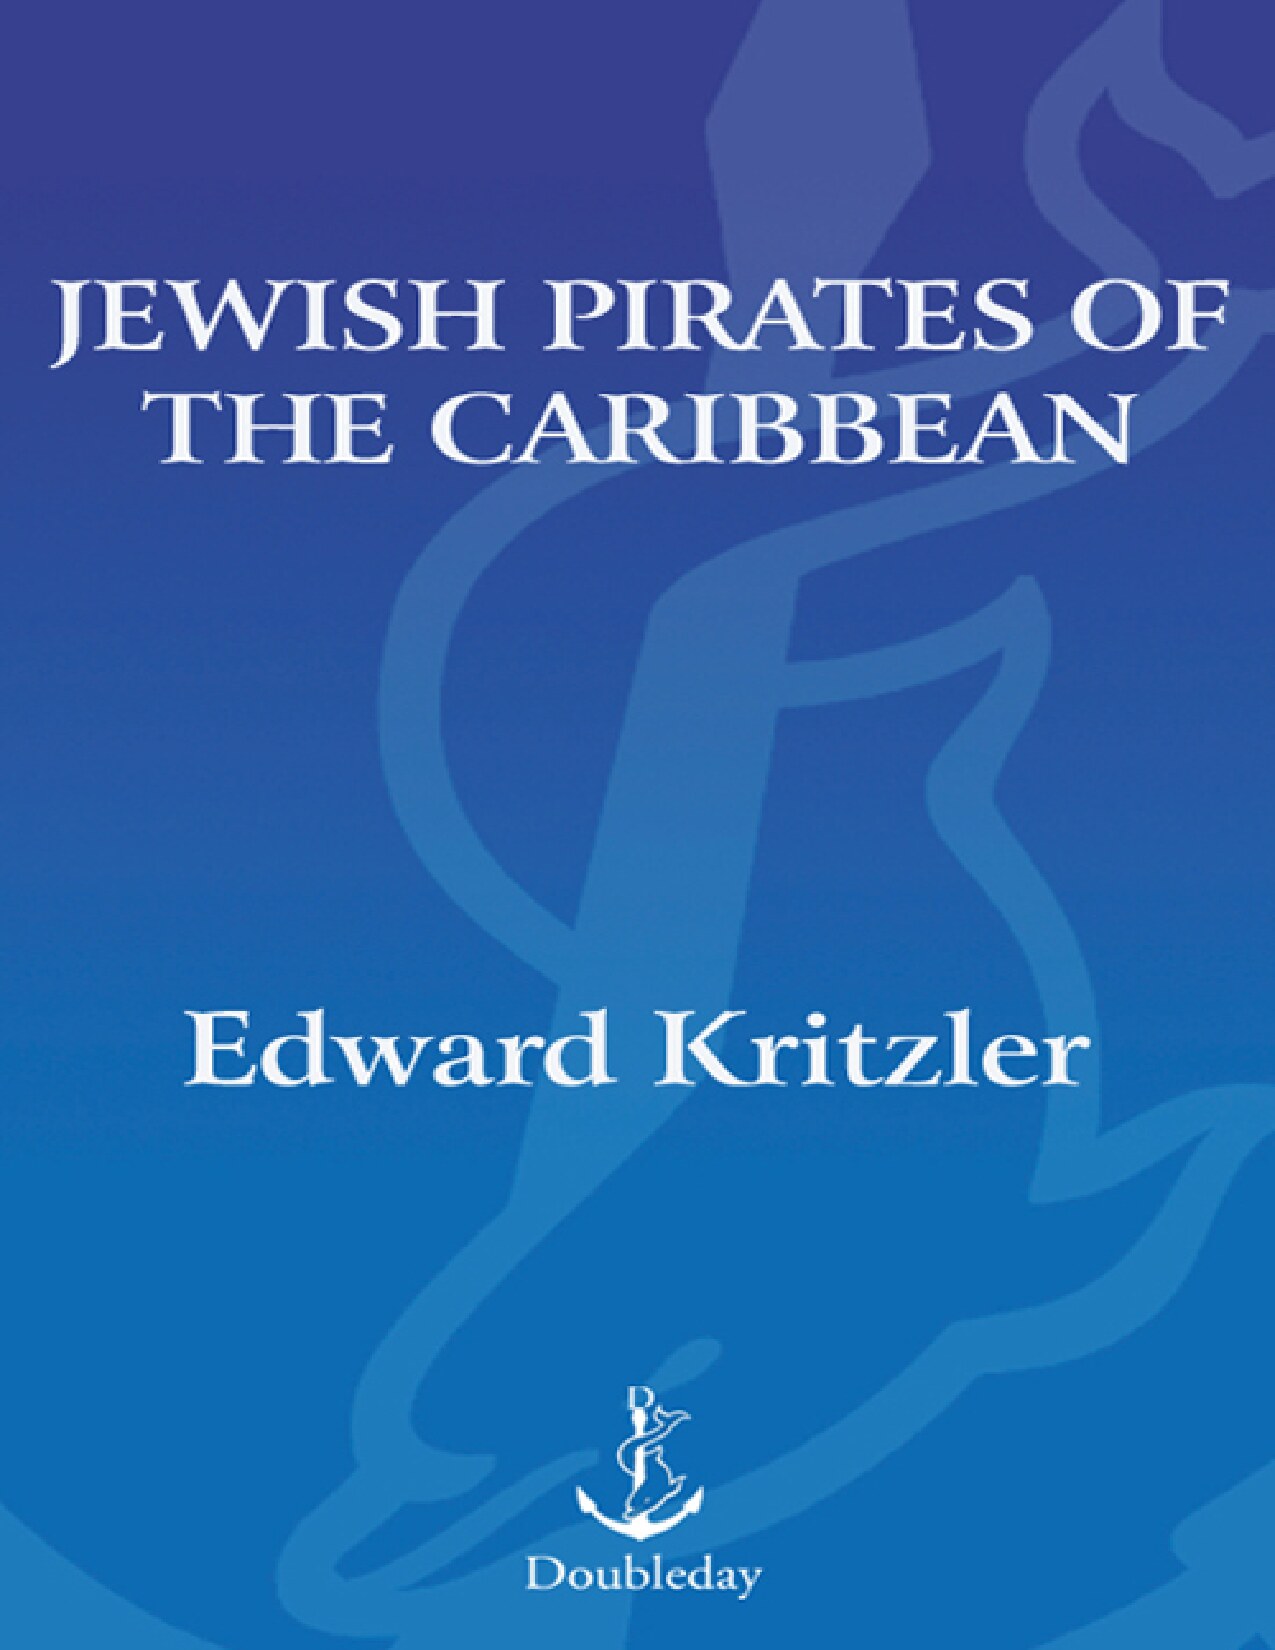 Kritzler, Edward; Jewish Pirates of the Caribbean